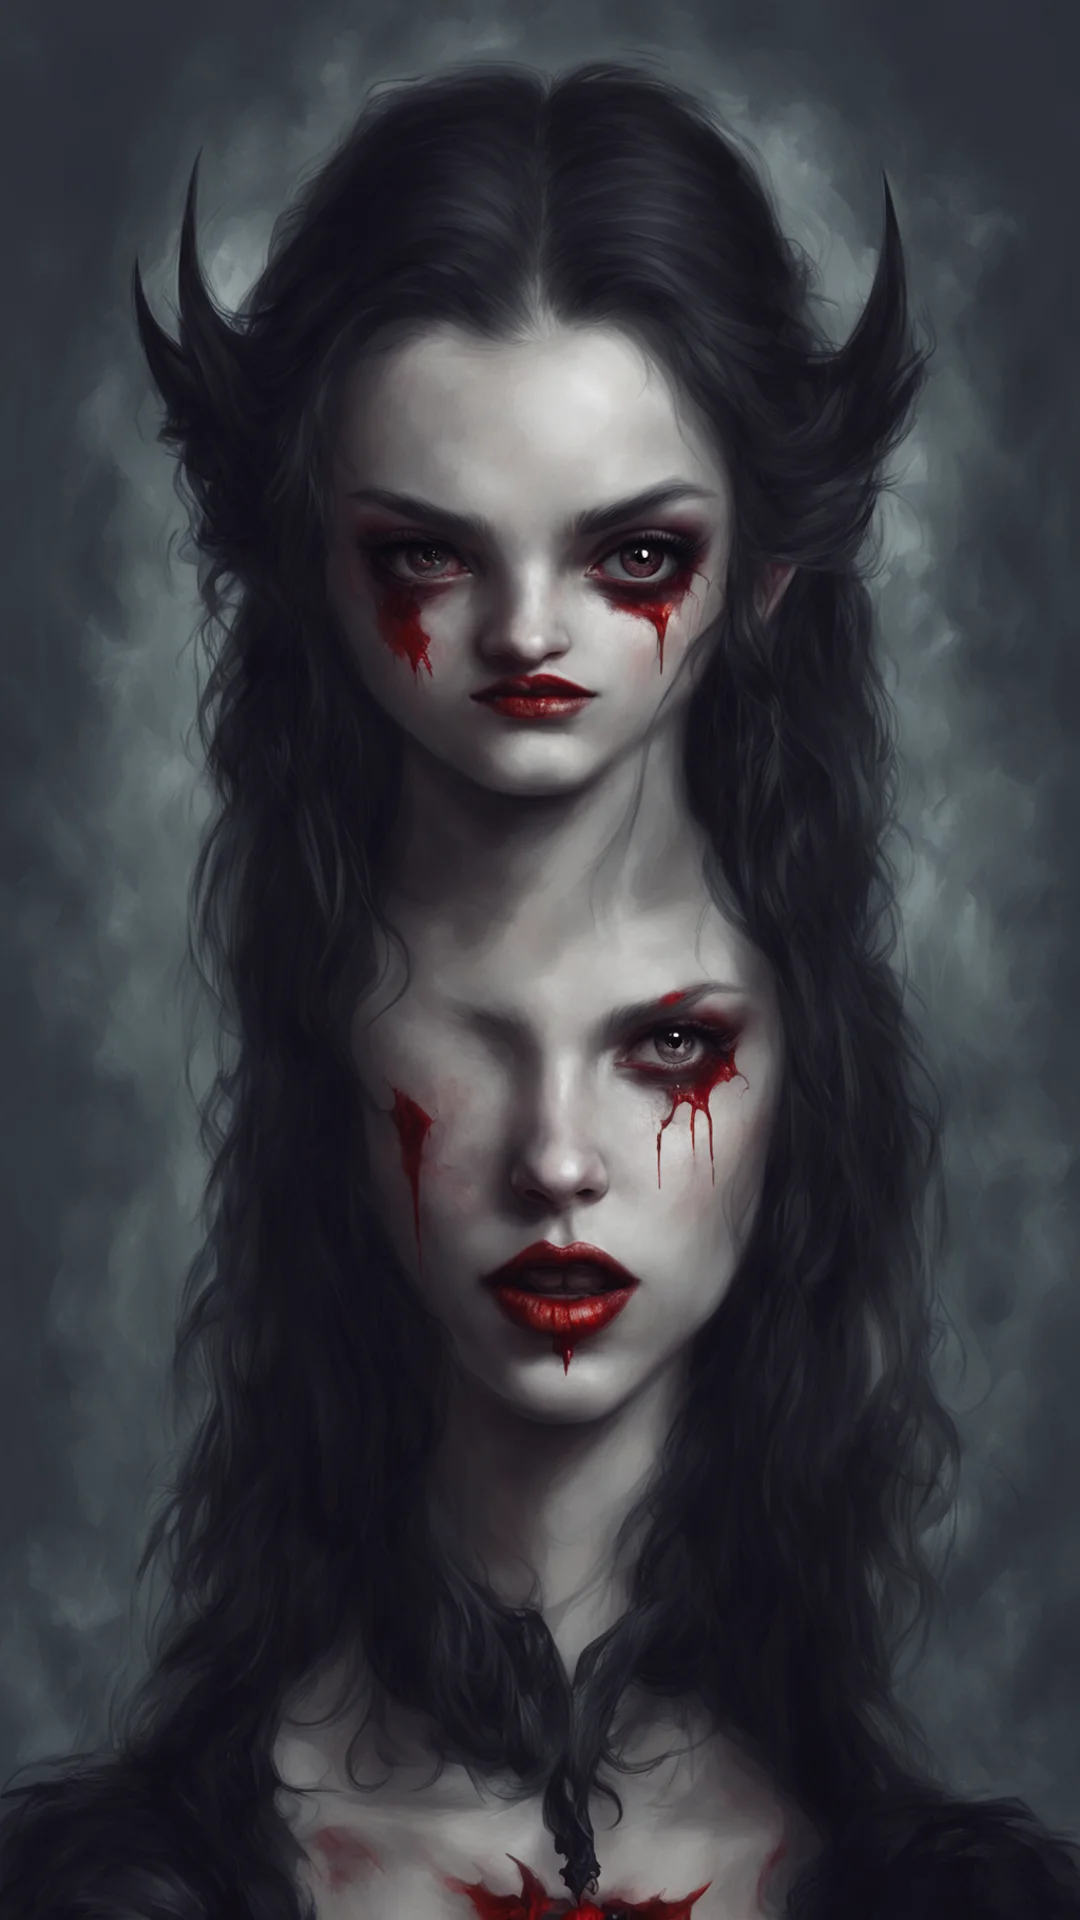 aitrending portrait of a vampire girl by anato finnstark ar 23 good looking fantastic 1 tall